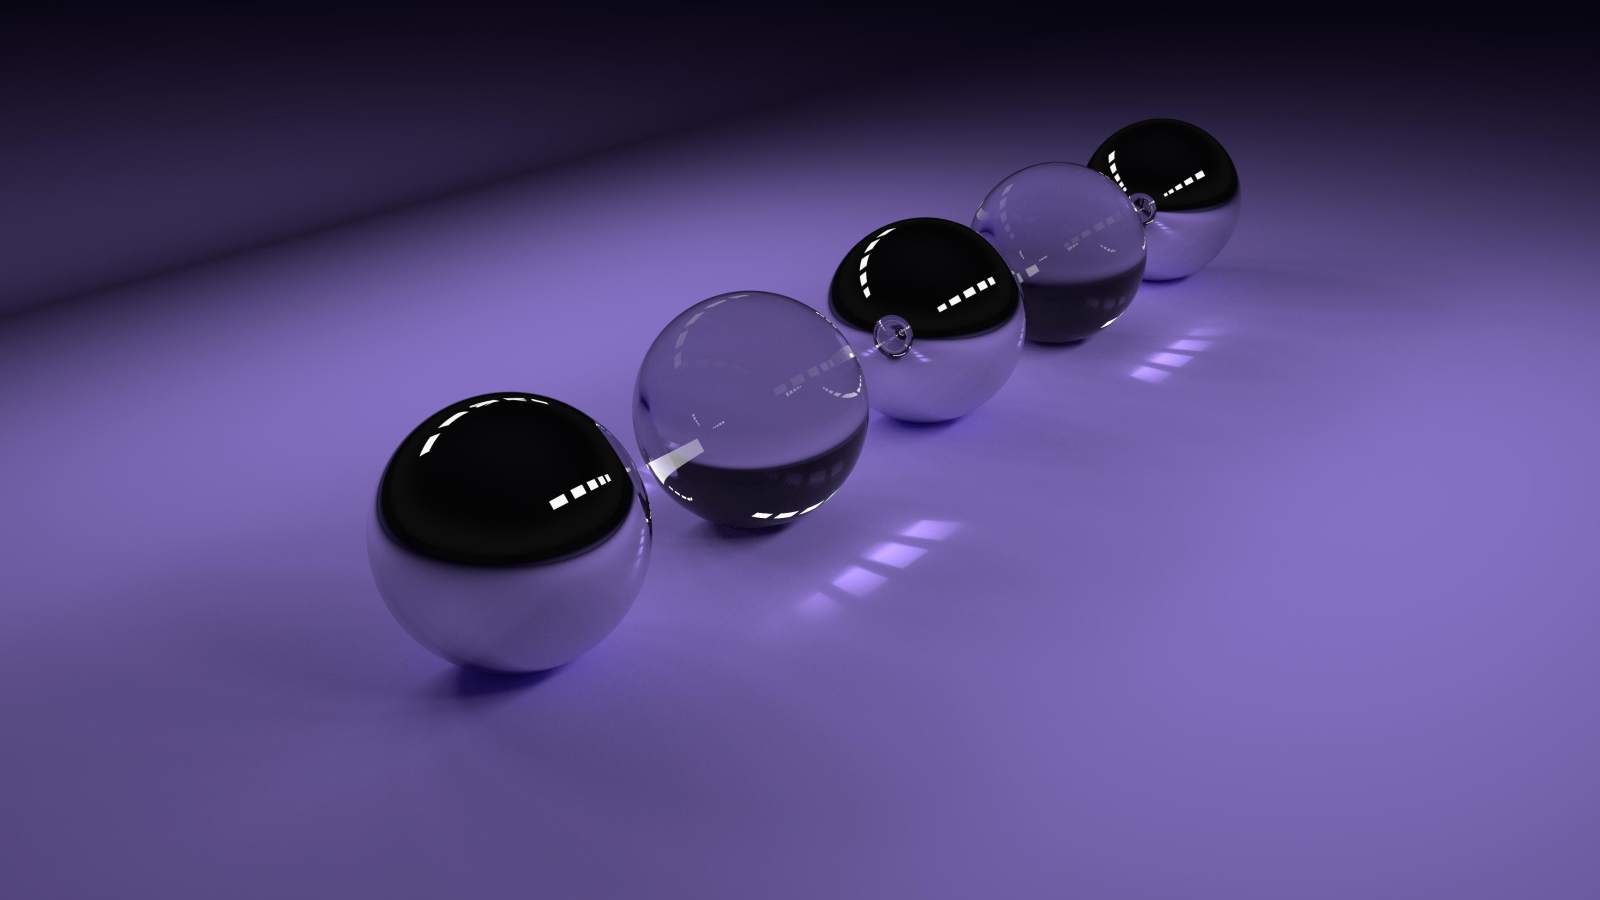 Transparent glass balls on a purple background, 3d graphics